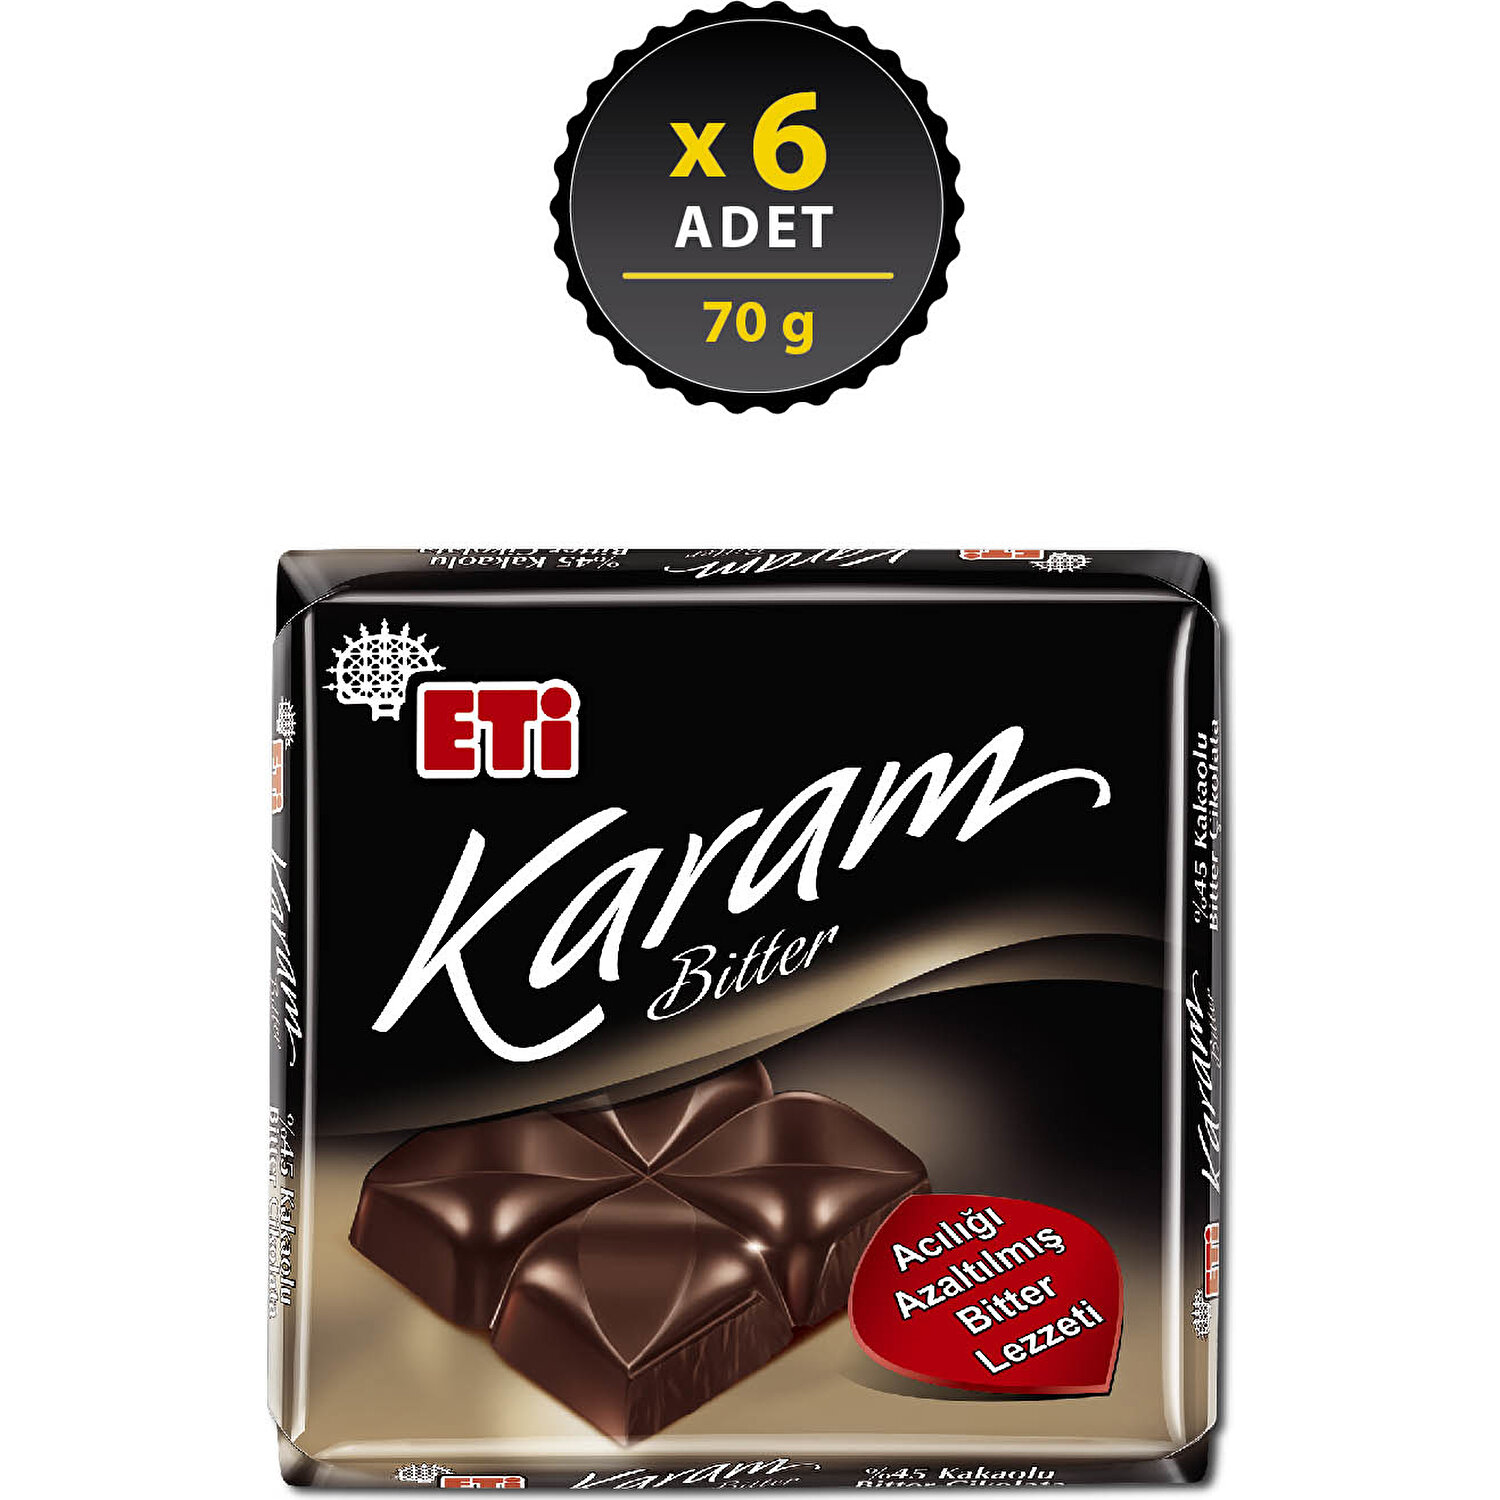 Eti Karam 45 Kakaolu Bitter Çikolata 70 g x 6 Adet Fiyatı